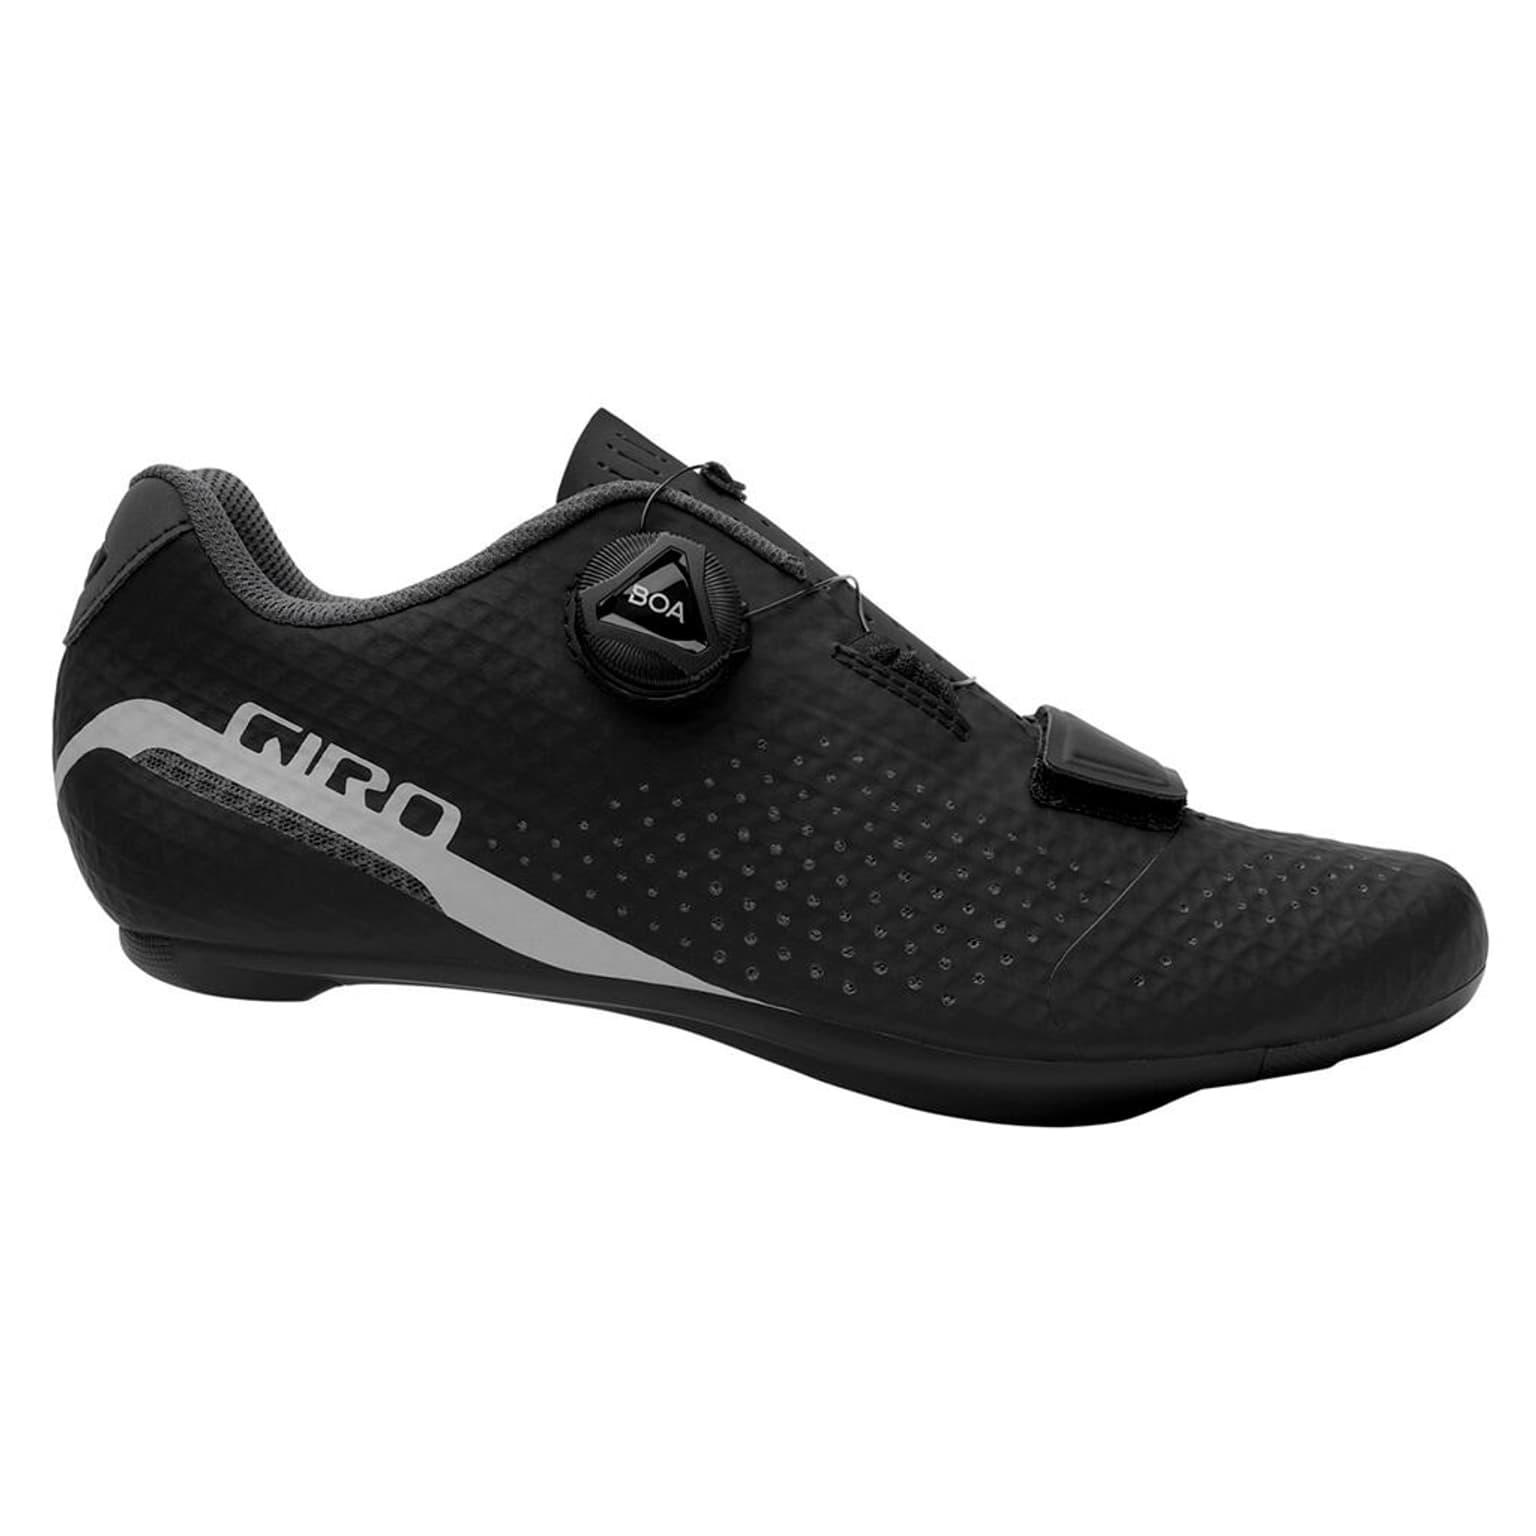 Giro Giro Cadet W Shoe Veloschuhe schwarz 1